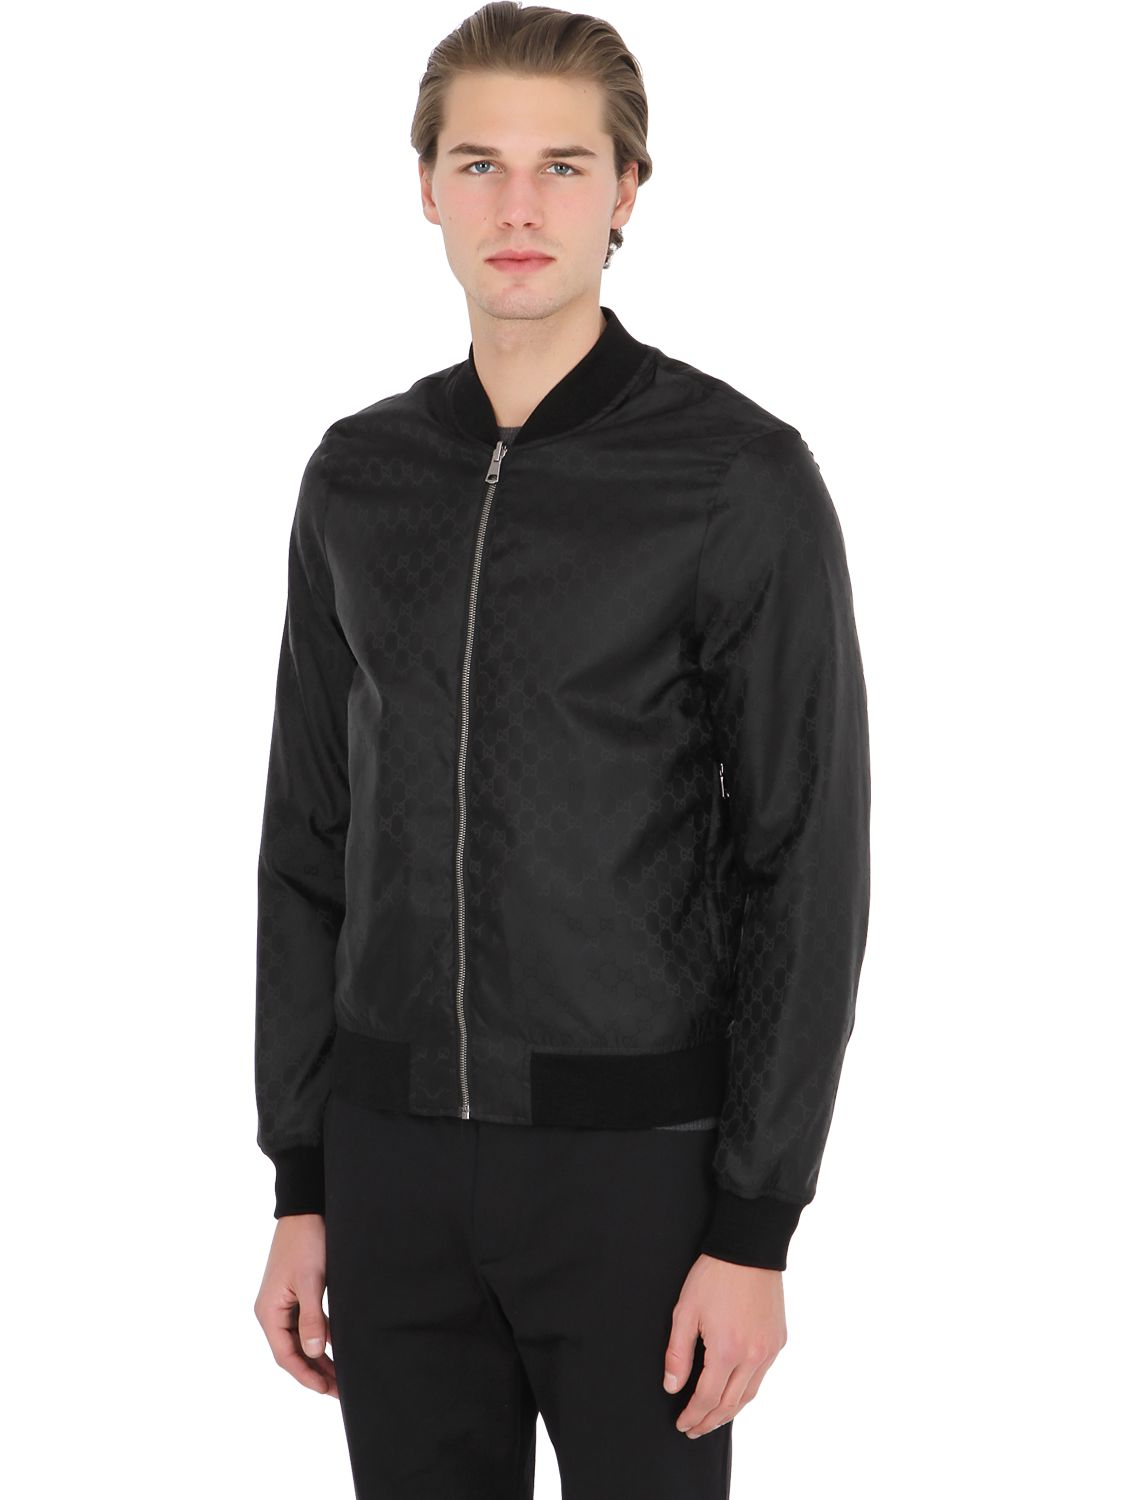 Gucci Reversible Nylon Bomber Jacket in Black for Men - Lyst